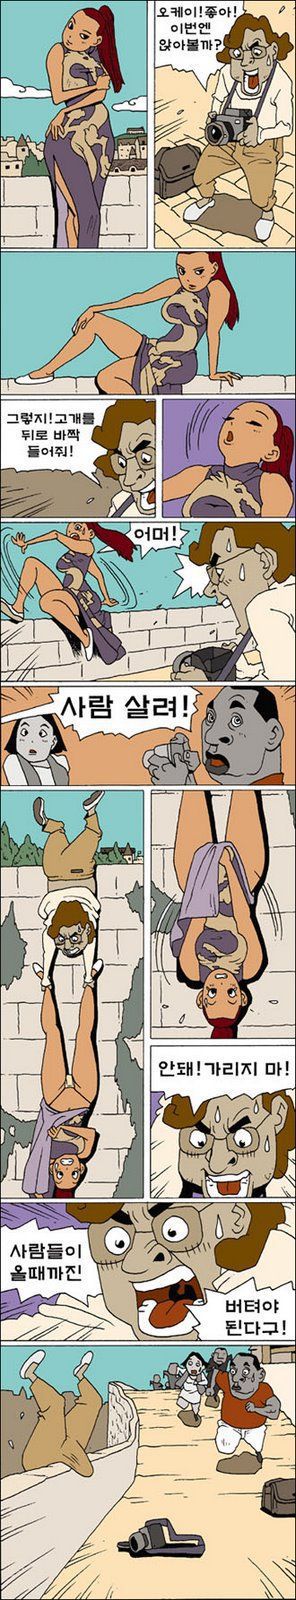 funny_korean_comic_640_high_32.jpg